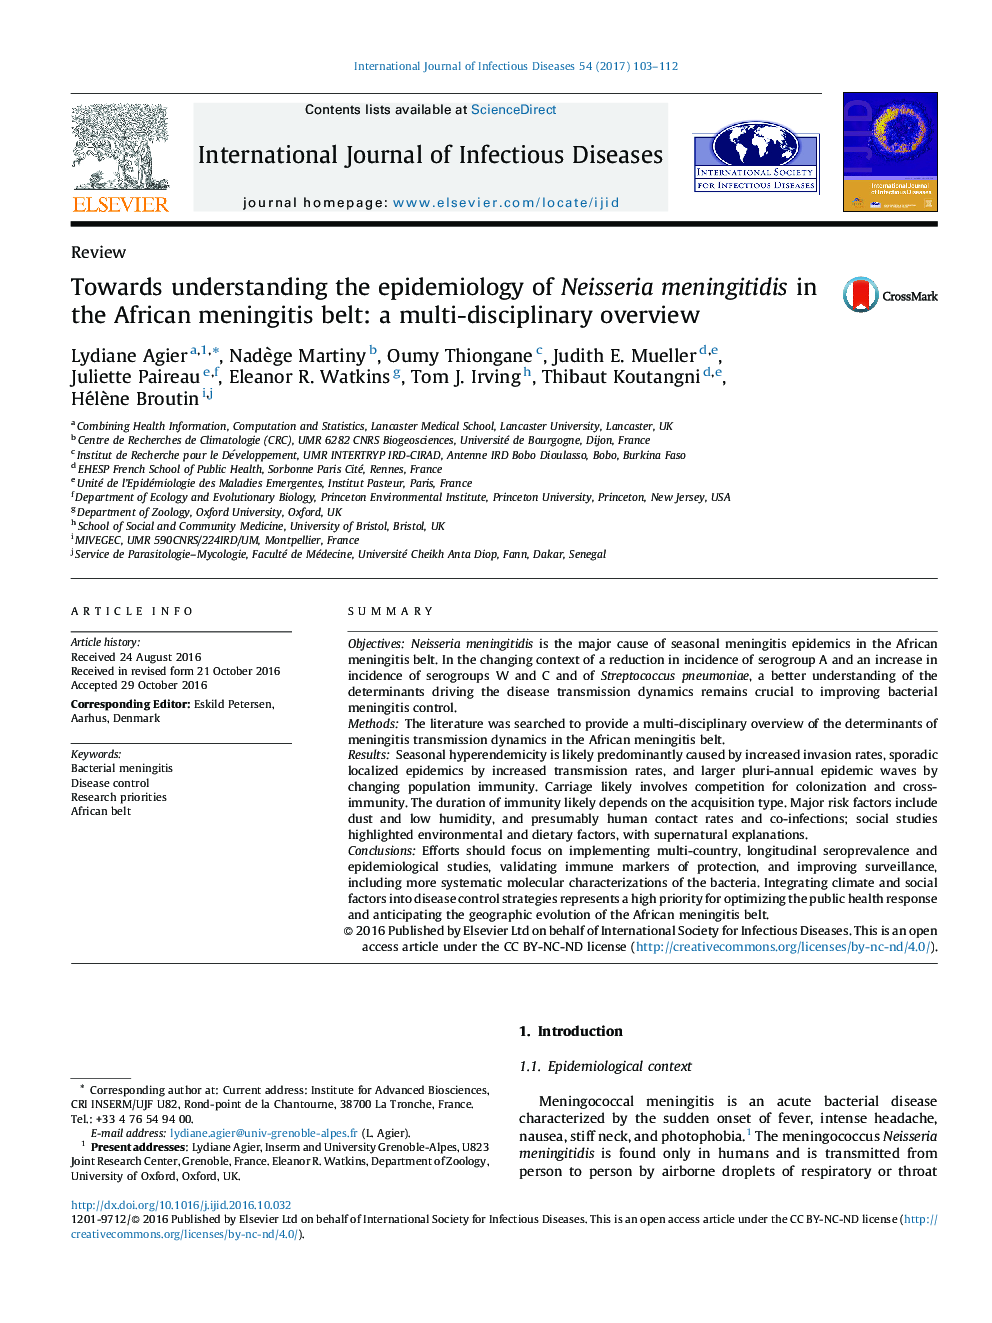 Towards understanding the epidemiology of Neisseria meningitidis in the African meningitis belt: a multi-disciplinary overview